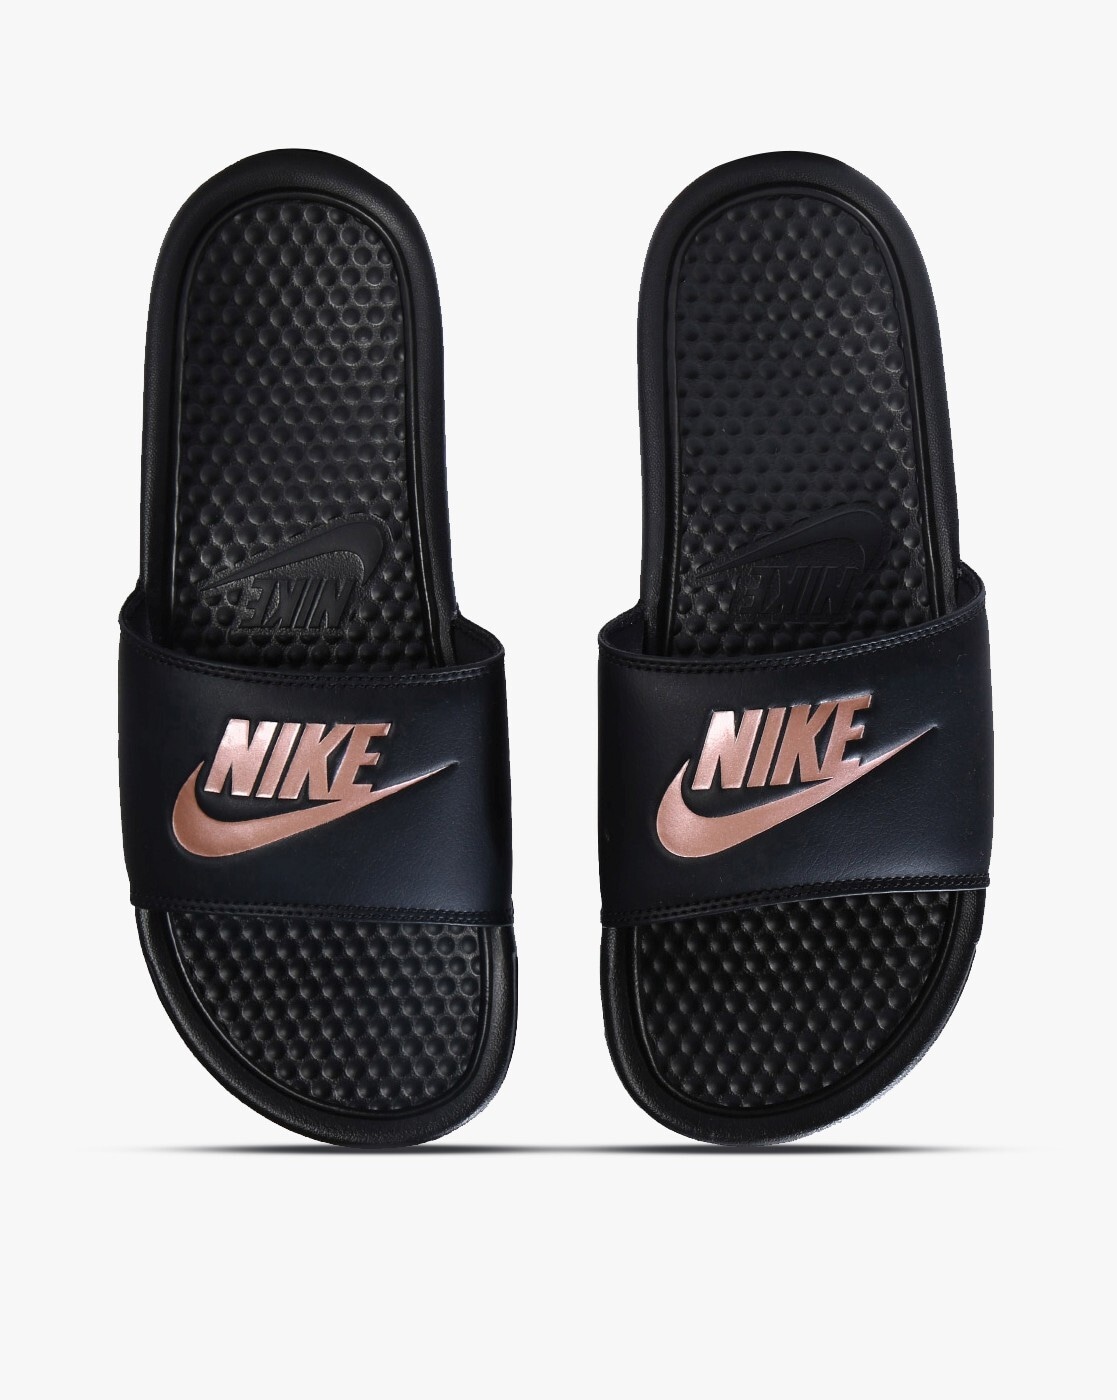 Buy Nike Slippers Online In India-sgquangbinhtourist.com.vn